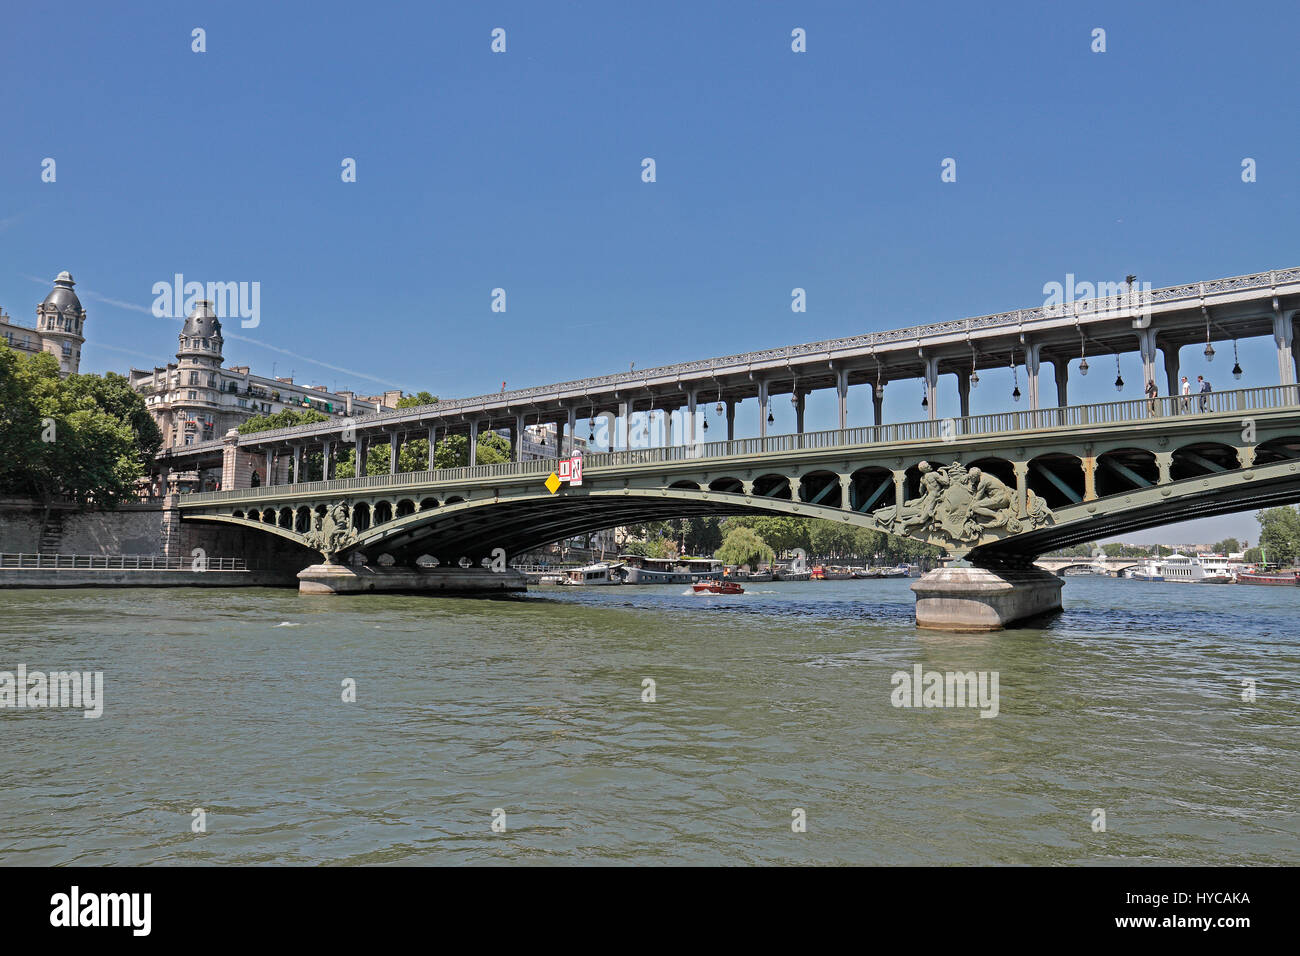 The Pont de Bir-Hakeim (Bir-Hakeim bridge) on the River Seine in Paris, France. Stock Photo